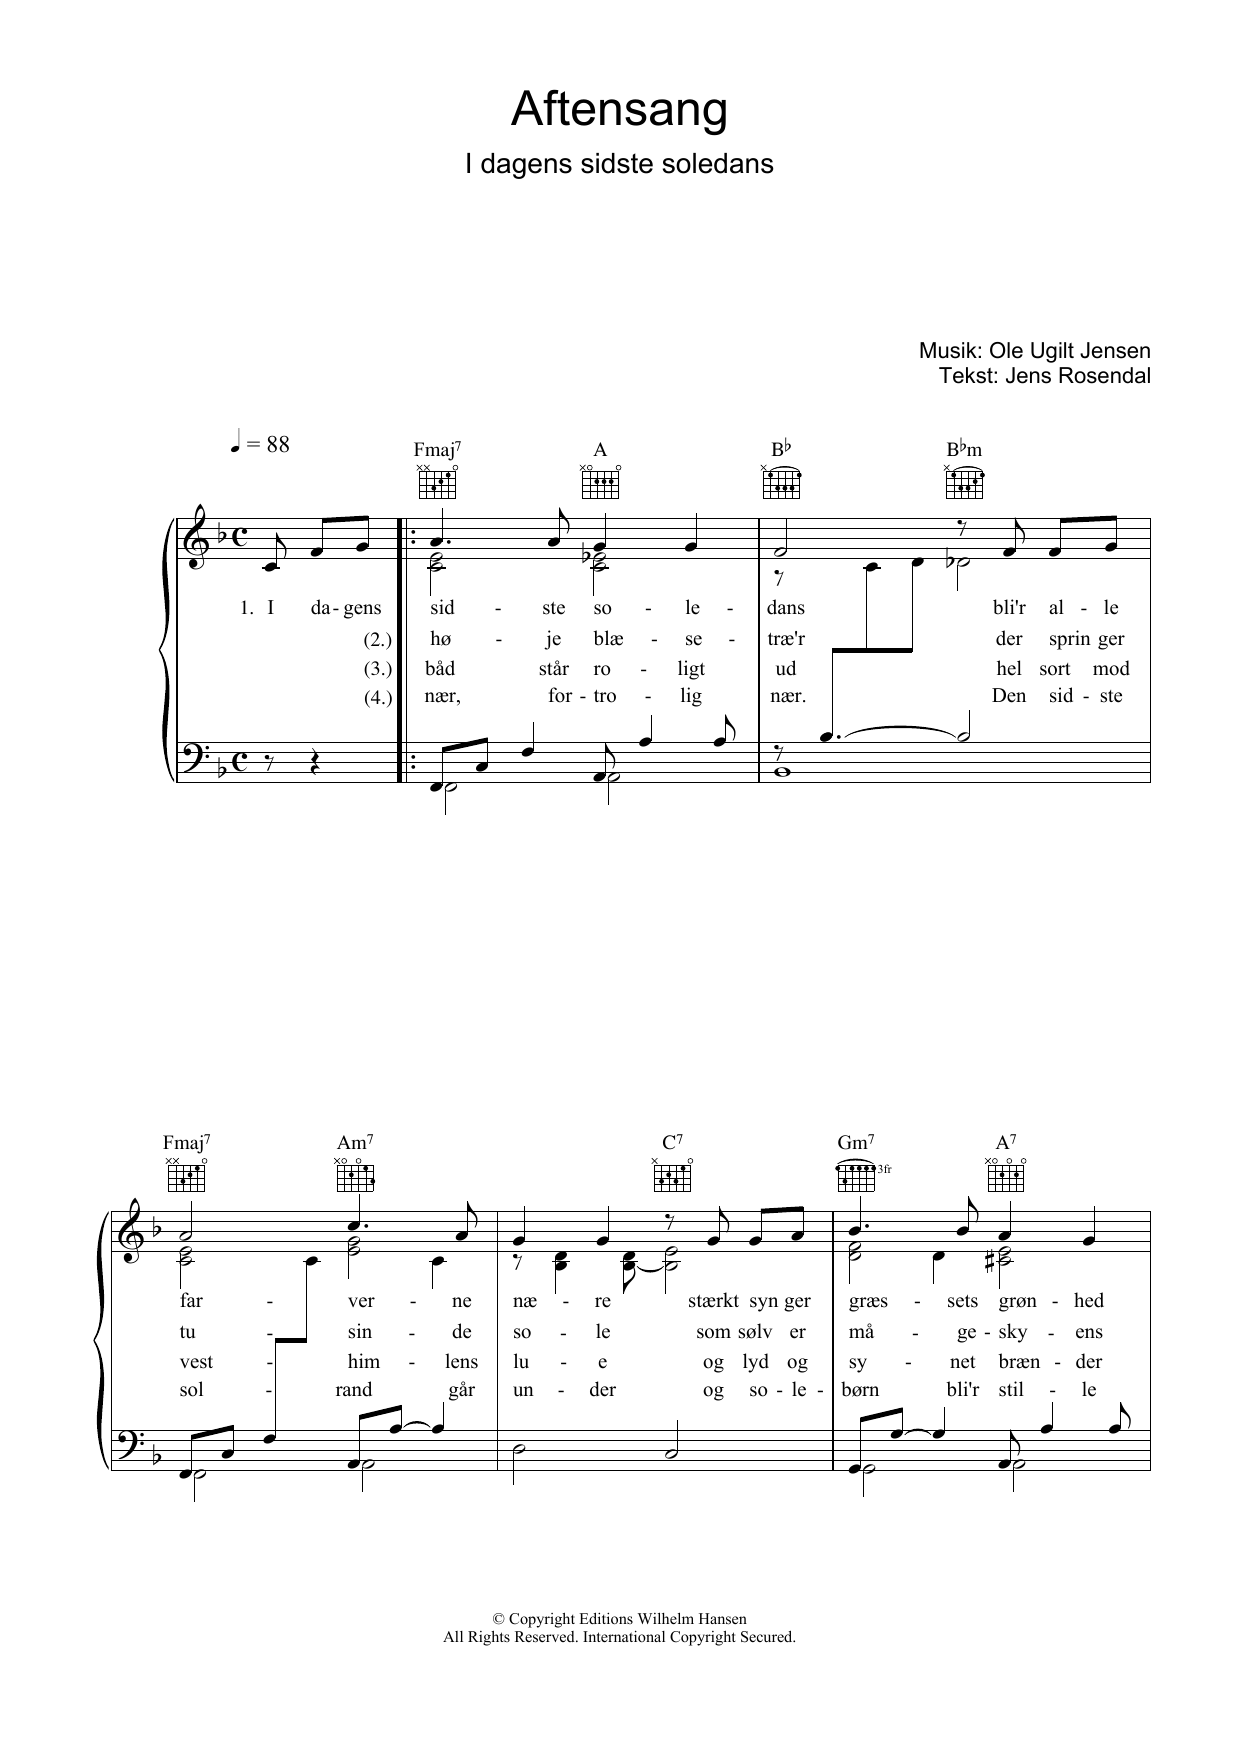 Ole Ugilt Jensen Aftensang I Dagens Sidste Soledans Sheet Music Notes & Chords for Piano, Vocal & Guitar (Right-Hand Melody) - Download or Print PDF